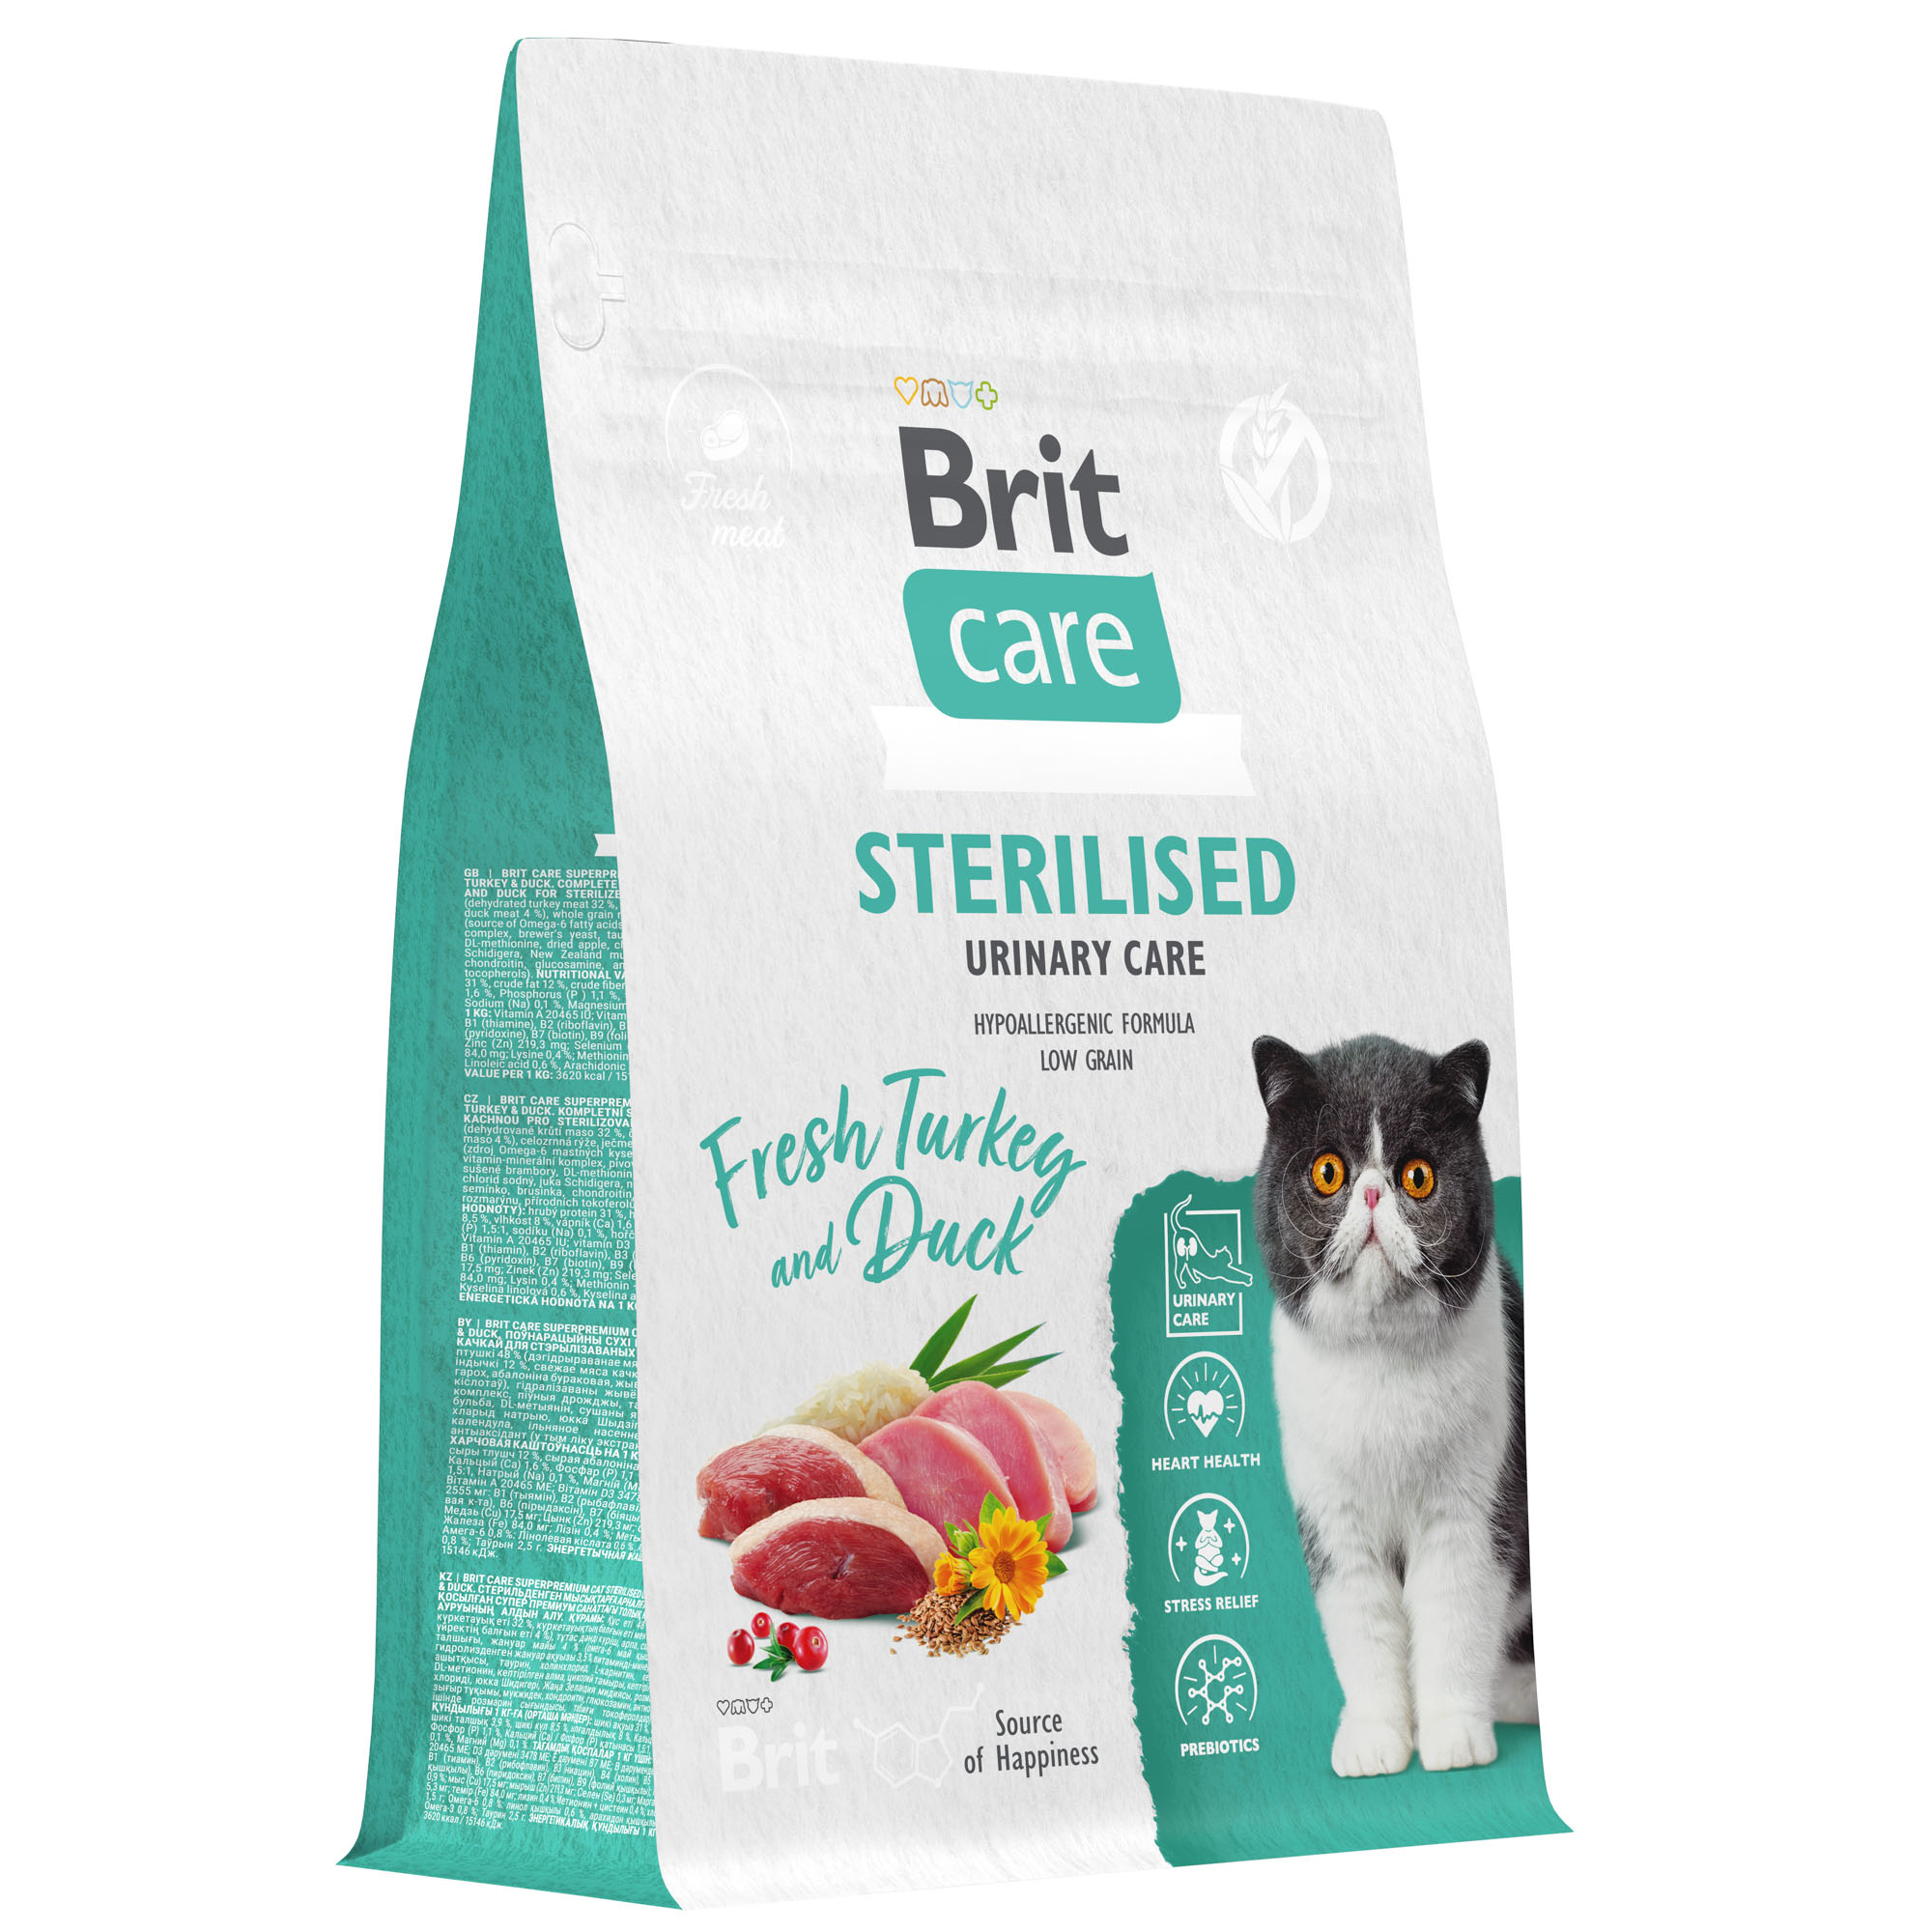 Сухой корм для кошек BRIT CARE Cat Sterilised Urinary Care с индейкой и уткой, 0,4 кг